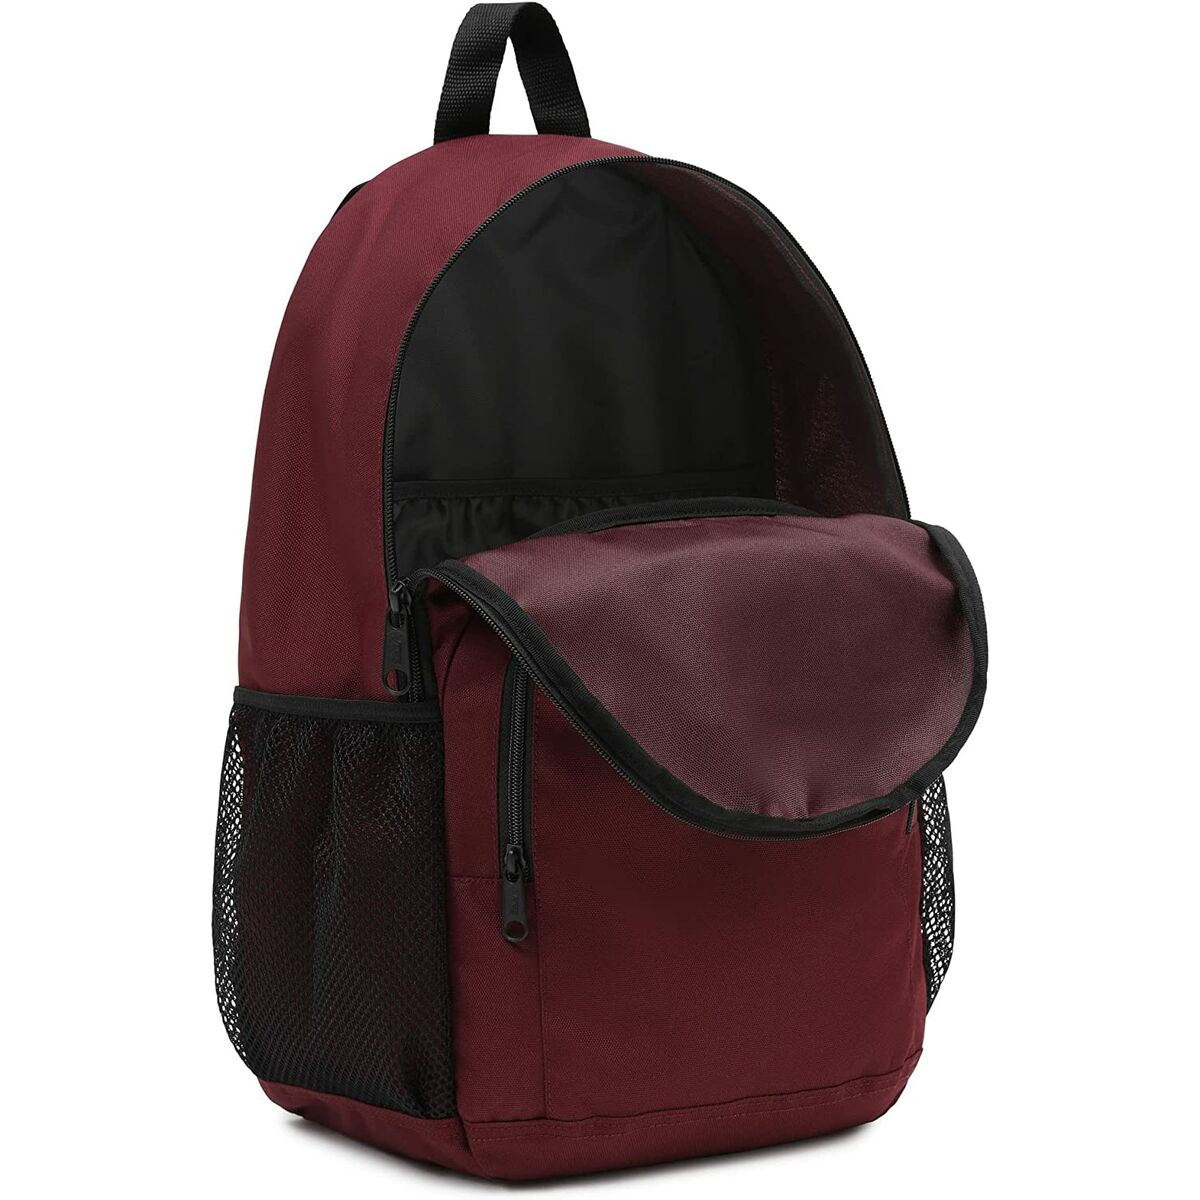 School Bag Vans Alumni Pack 5 Burgundy Multicolour-2